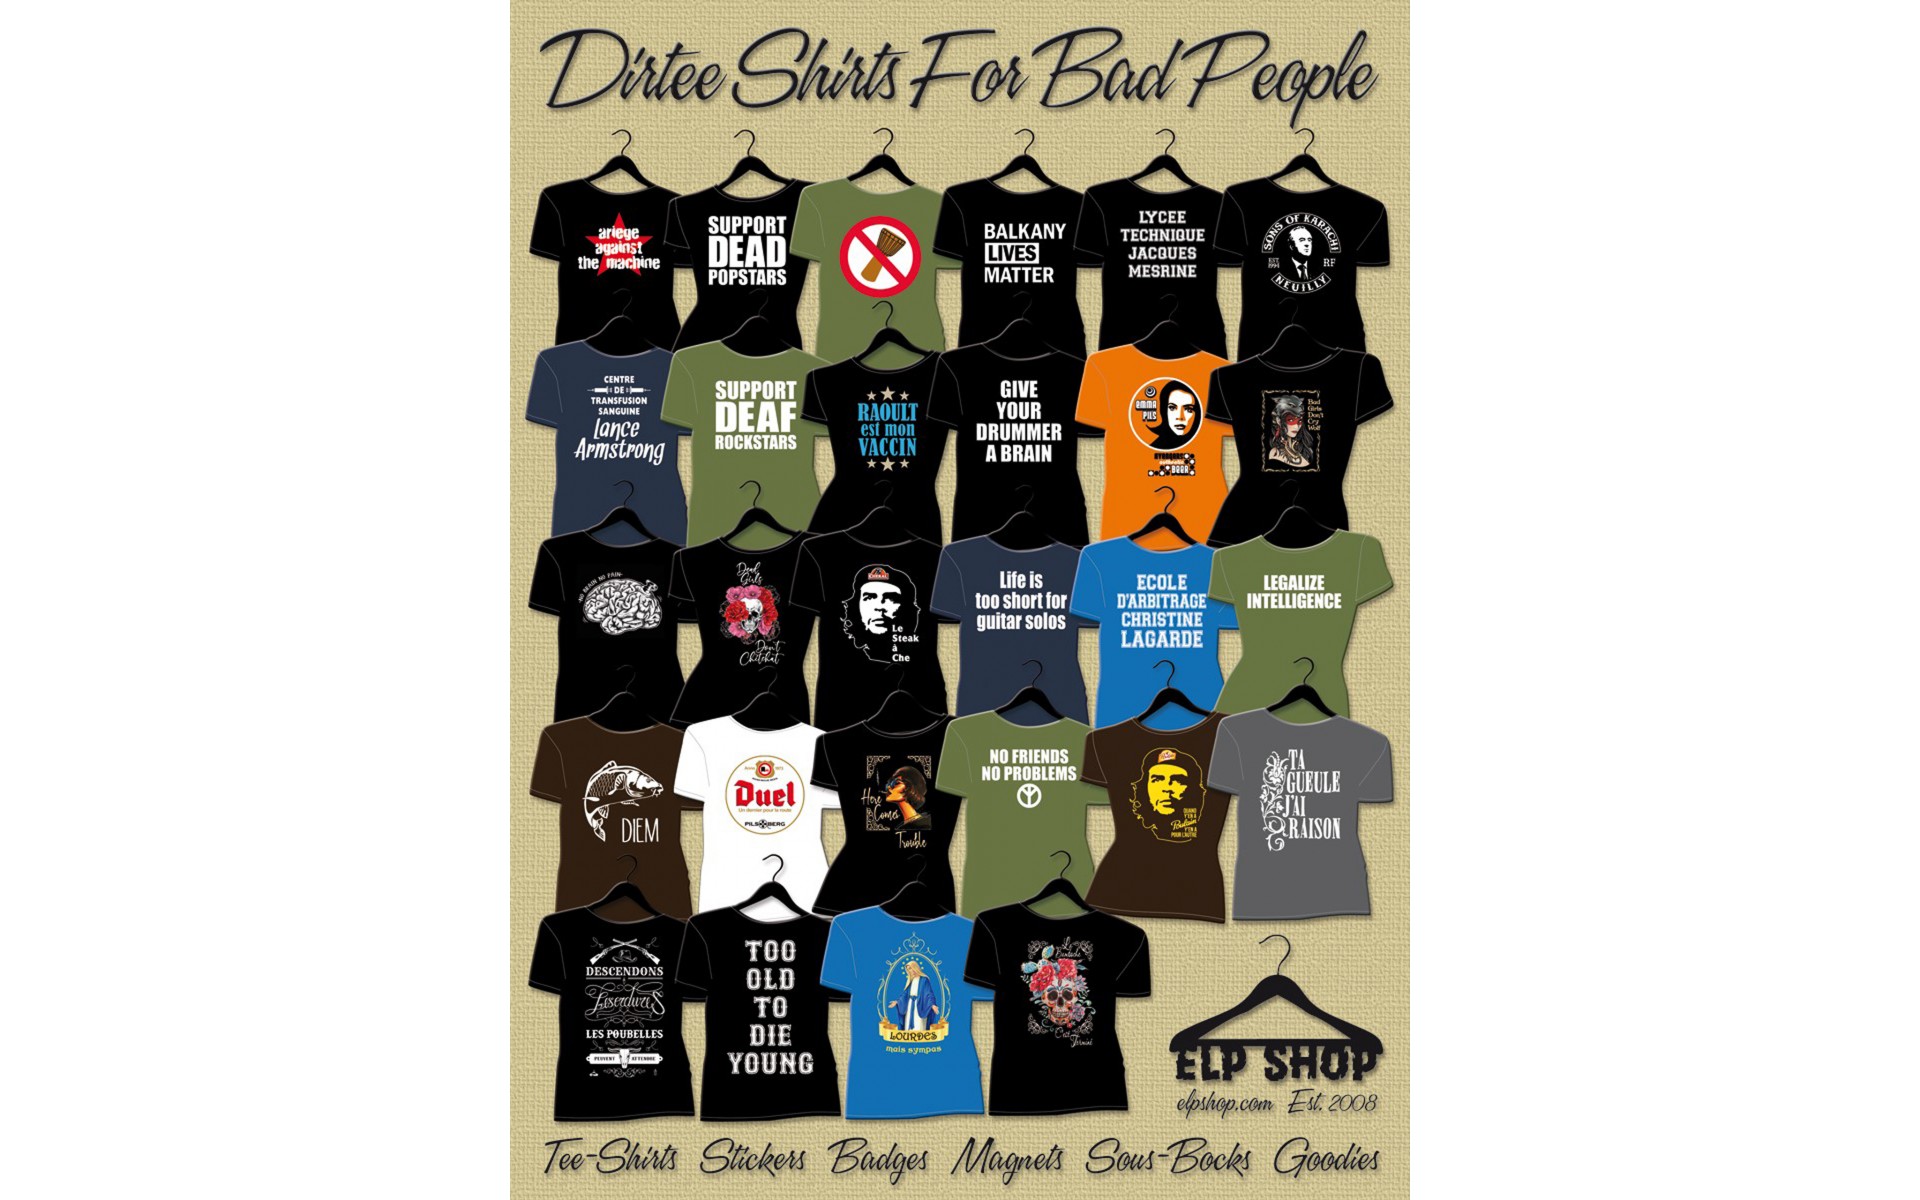 Dirtee shirts for bad people